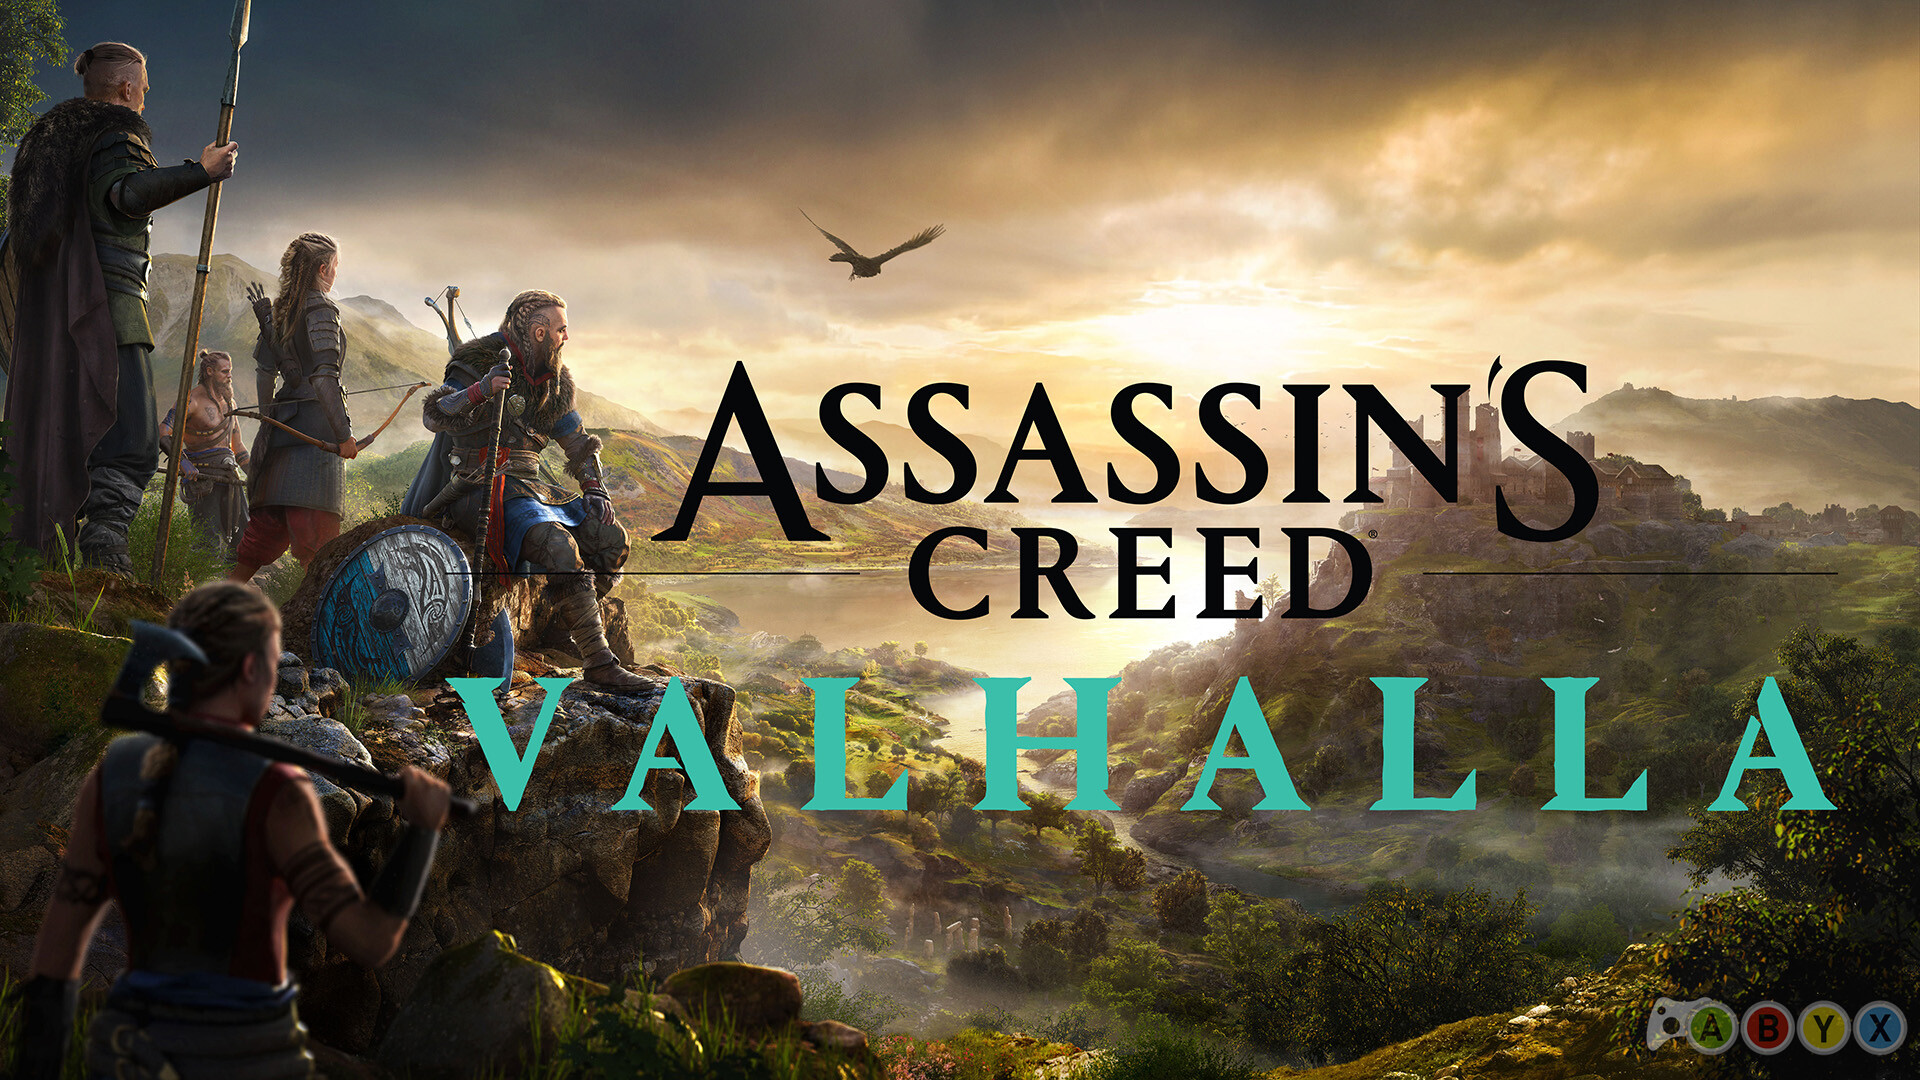 Assassins Creed: Valhalla